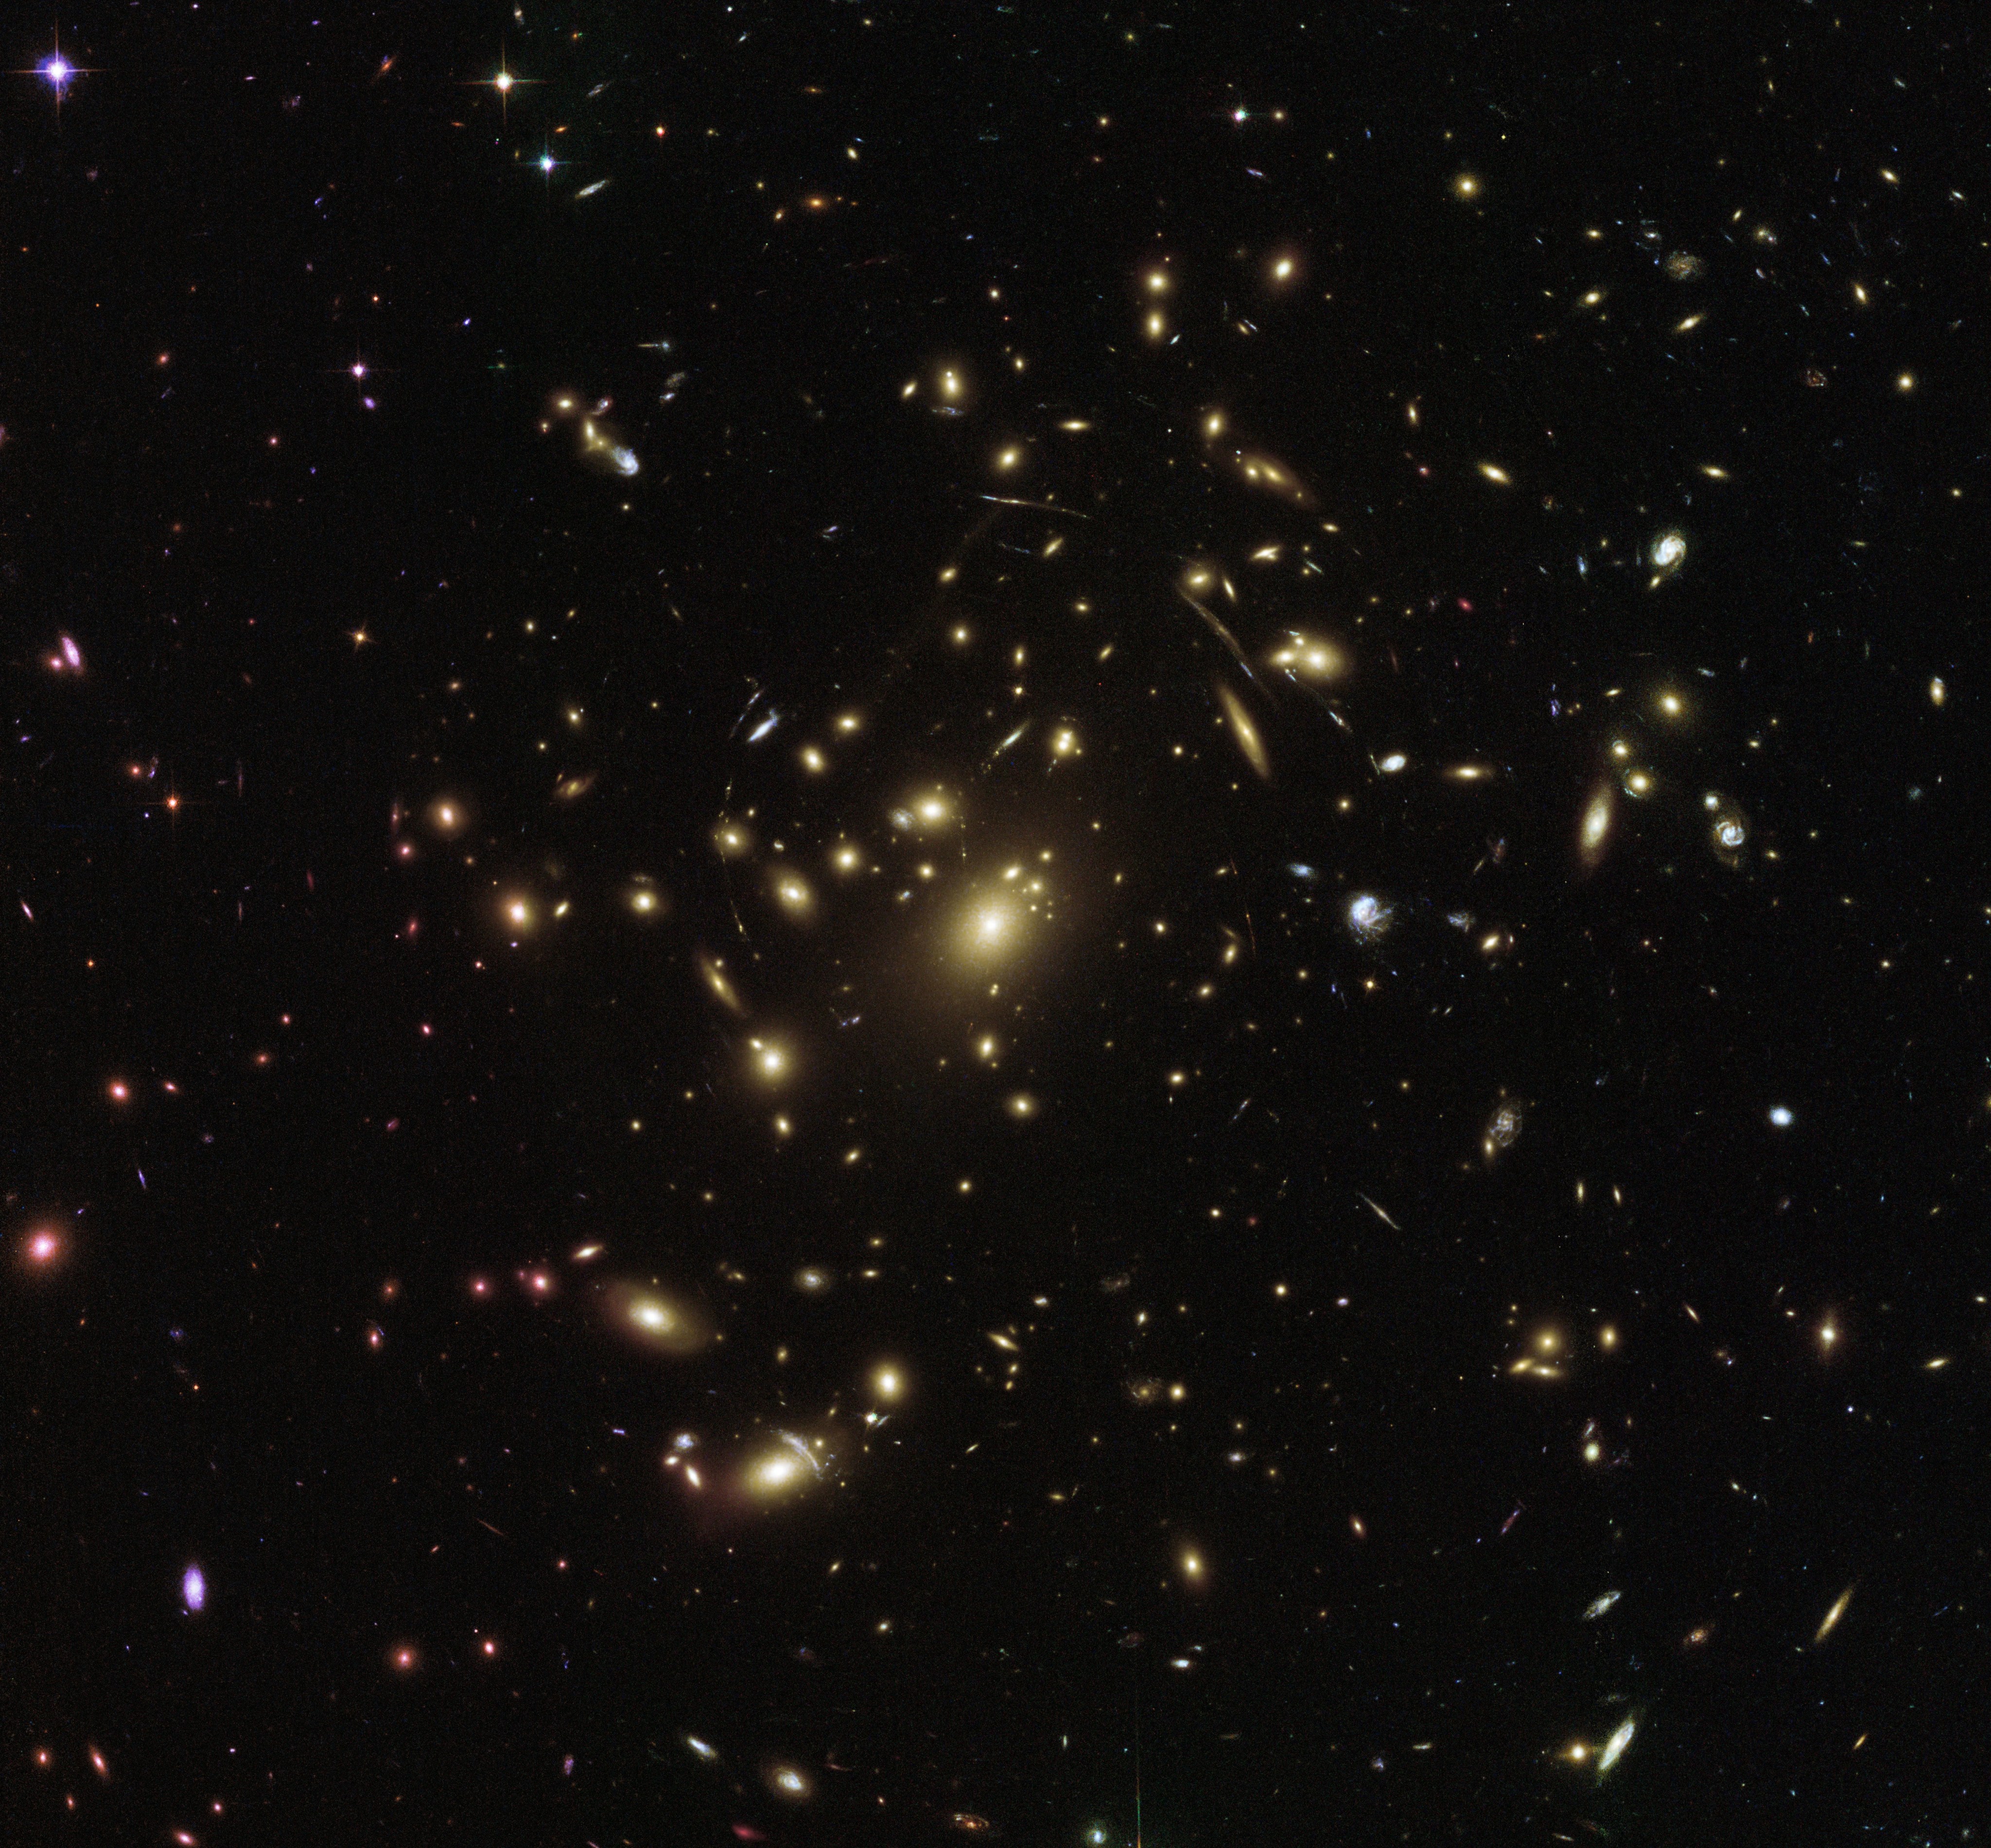 Image of galaxies